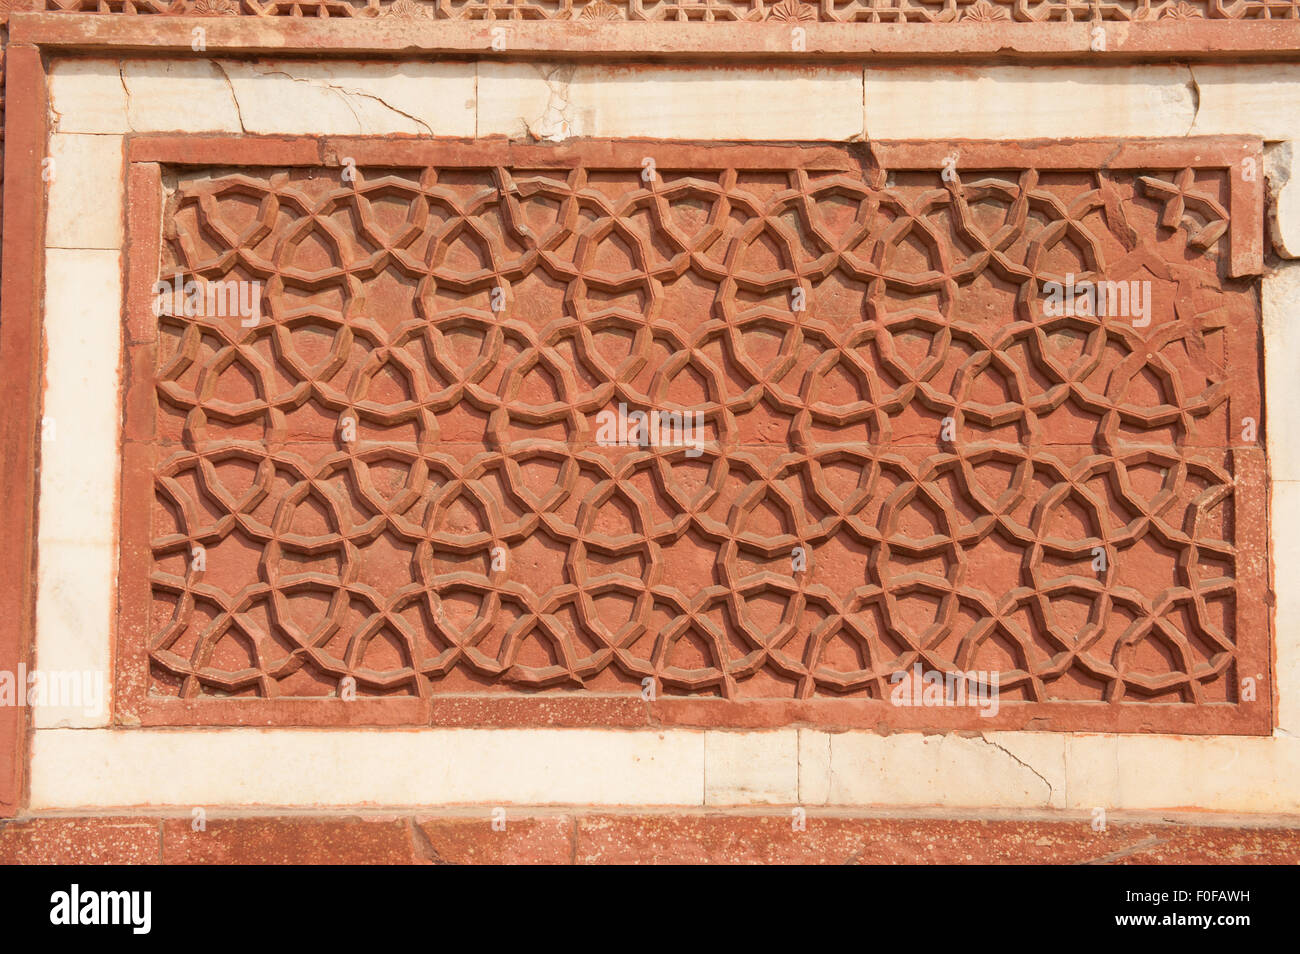 Agra fort, Utar Pradesh, India. Red sandstone inlaid decorative panel with geometric design of interlocking dodecagons (twelve-sided shapes) Stock Photo